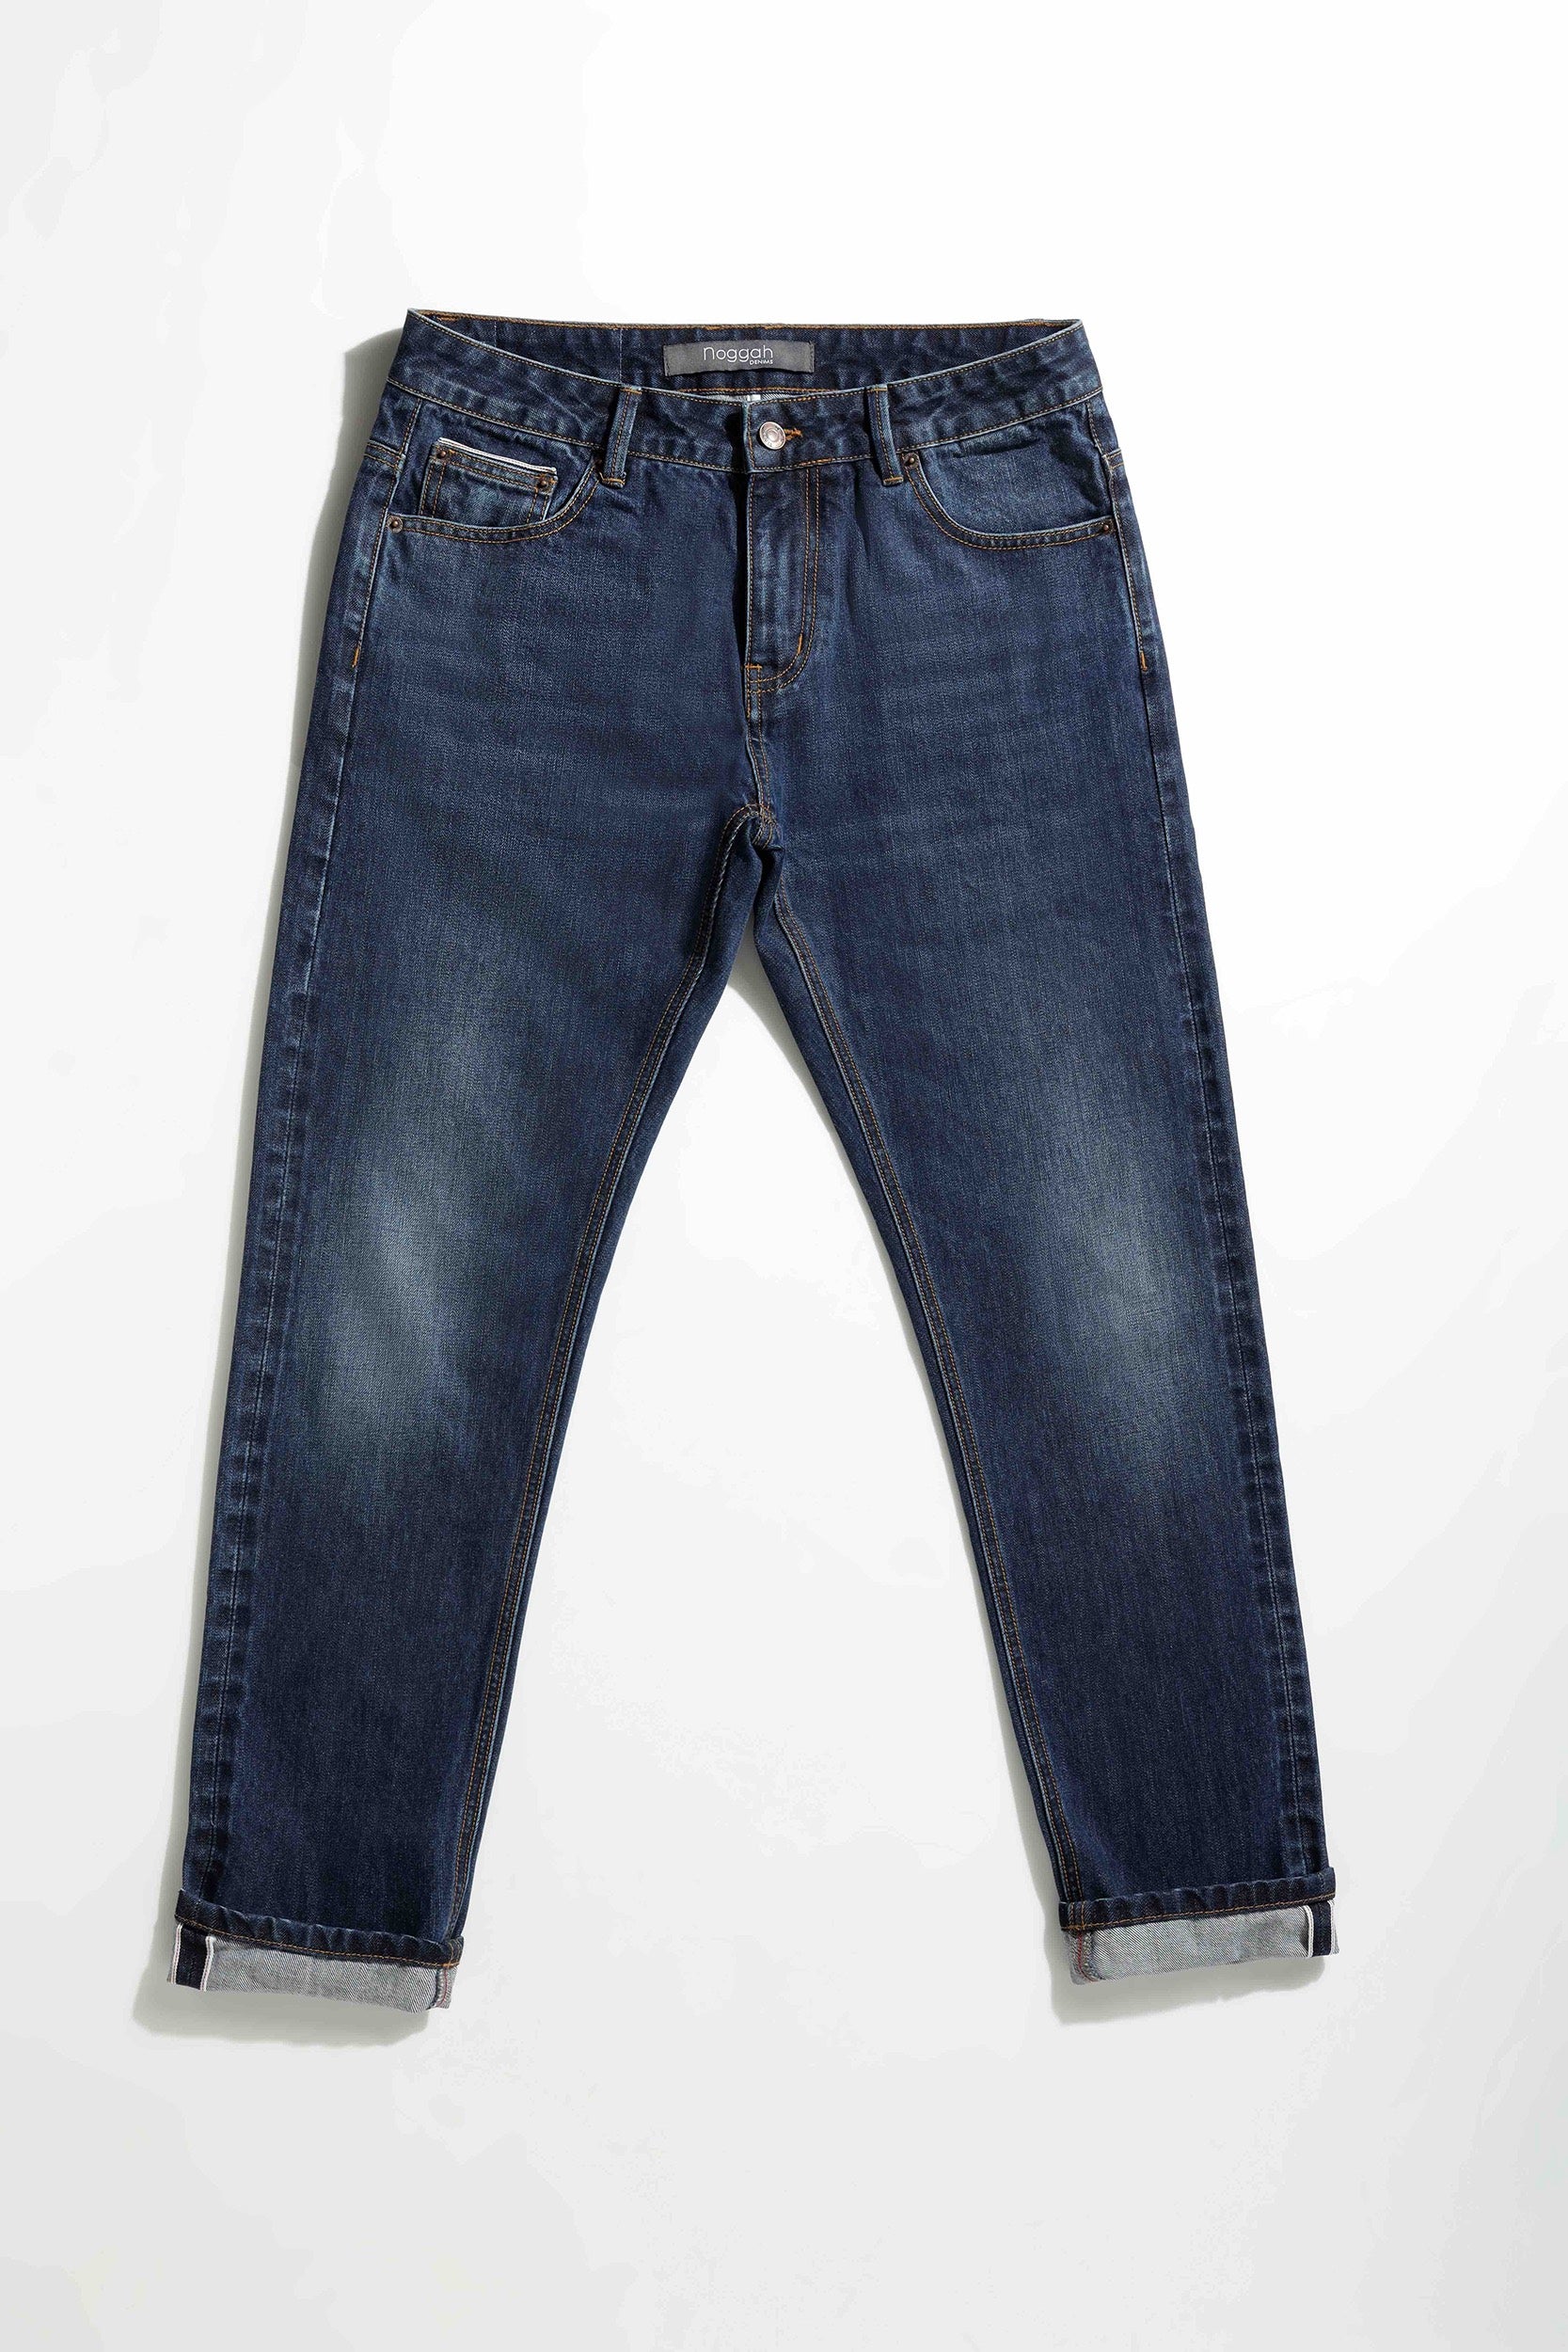 SAUCE ZHAN 315XX Men's Jeans Indigo Sanforized Selvedge Denim Jeans Regular  Fit Taper Leg 14.5 oz - Walmart.com